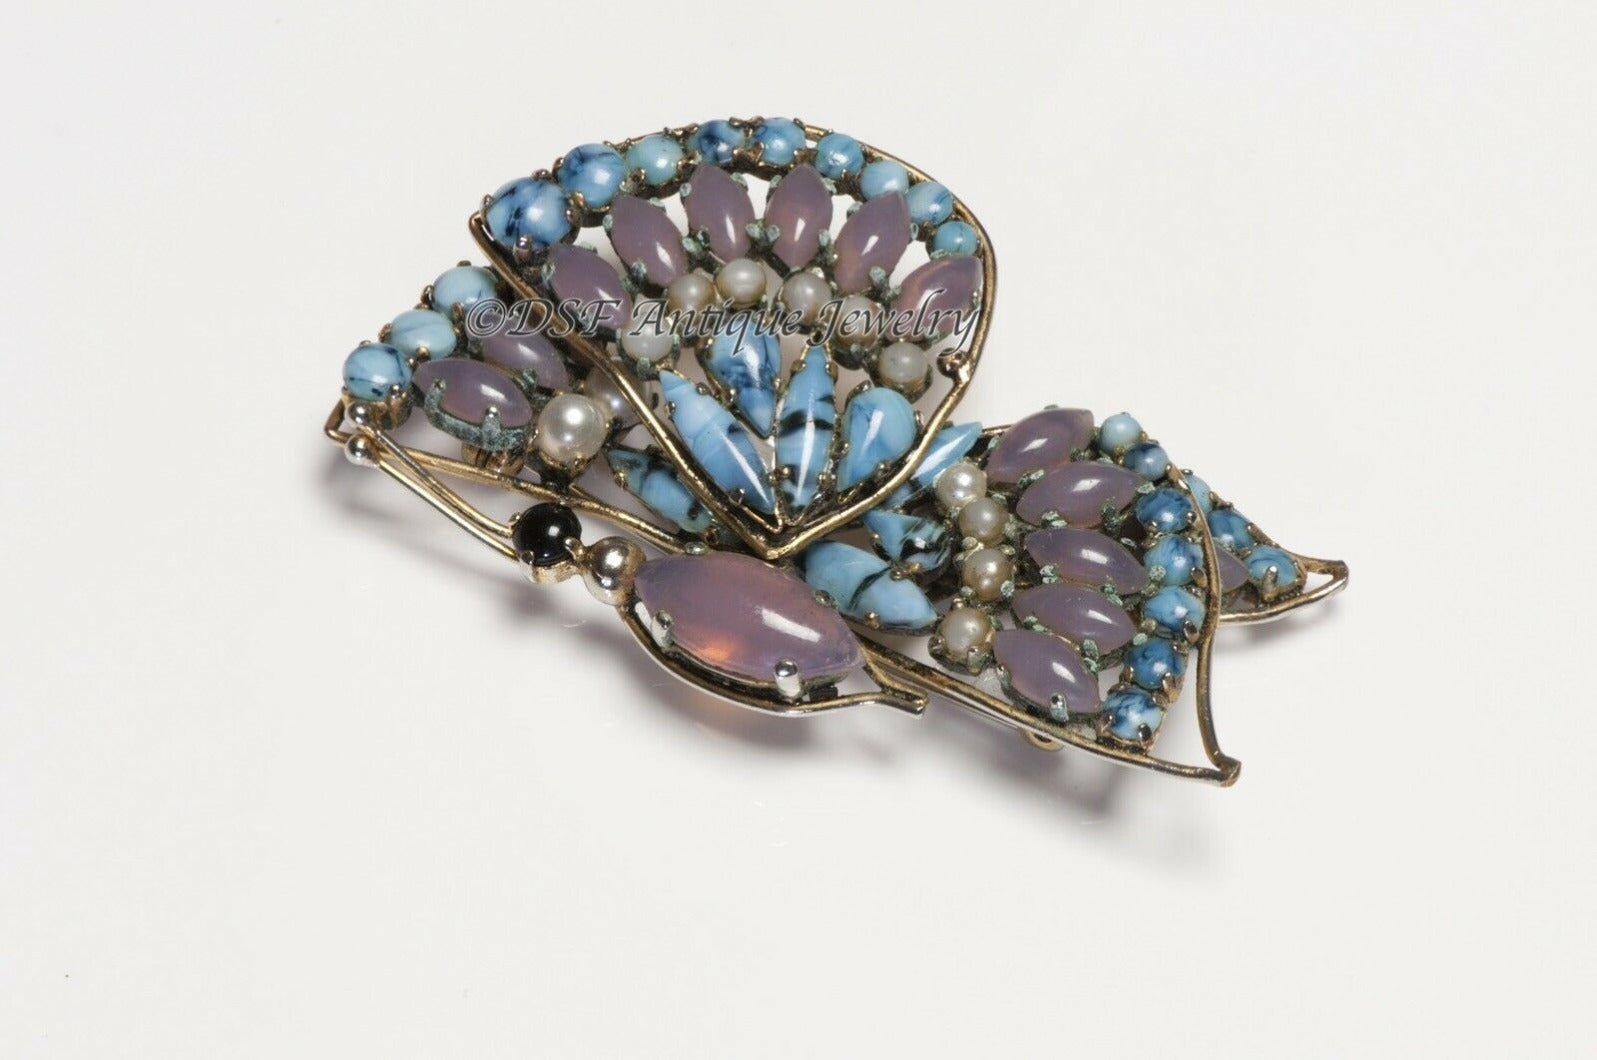 Christian Dior Henkel & Grosse 1964 Blue Pink Glass Faux Pearl Butterfly Brooch